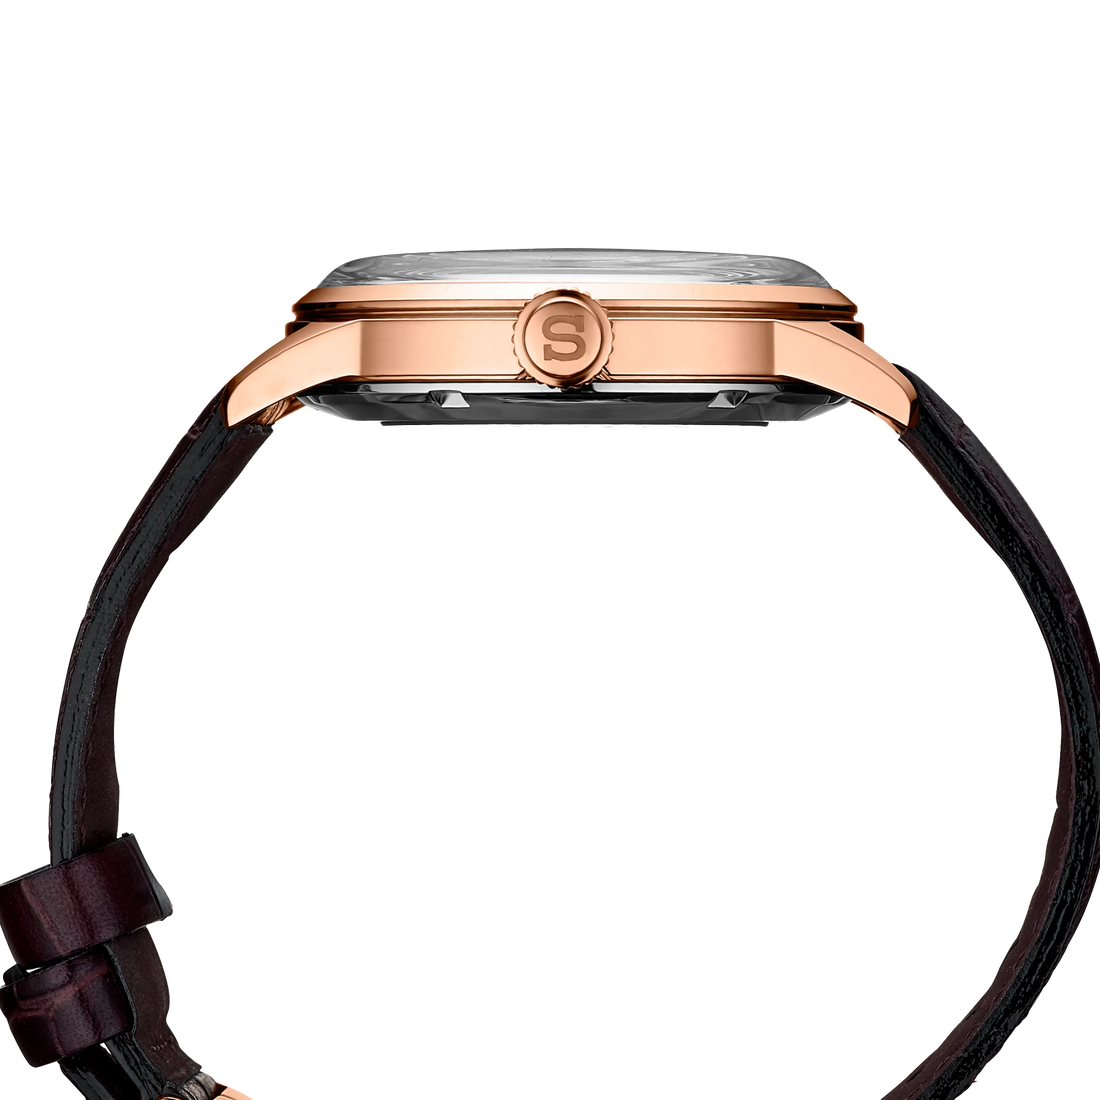 Seiko Presage SRPB46 Rose Gold Leather Strap 40.5mm Watch 